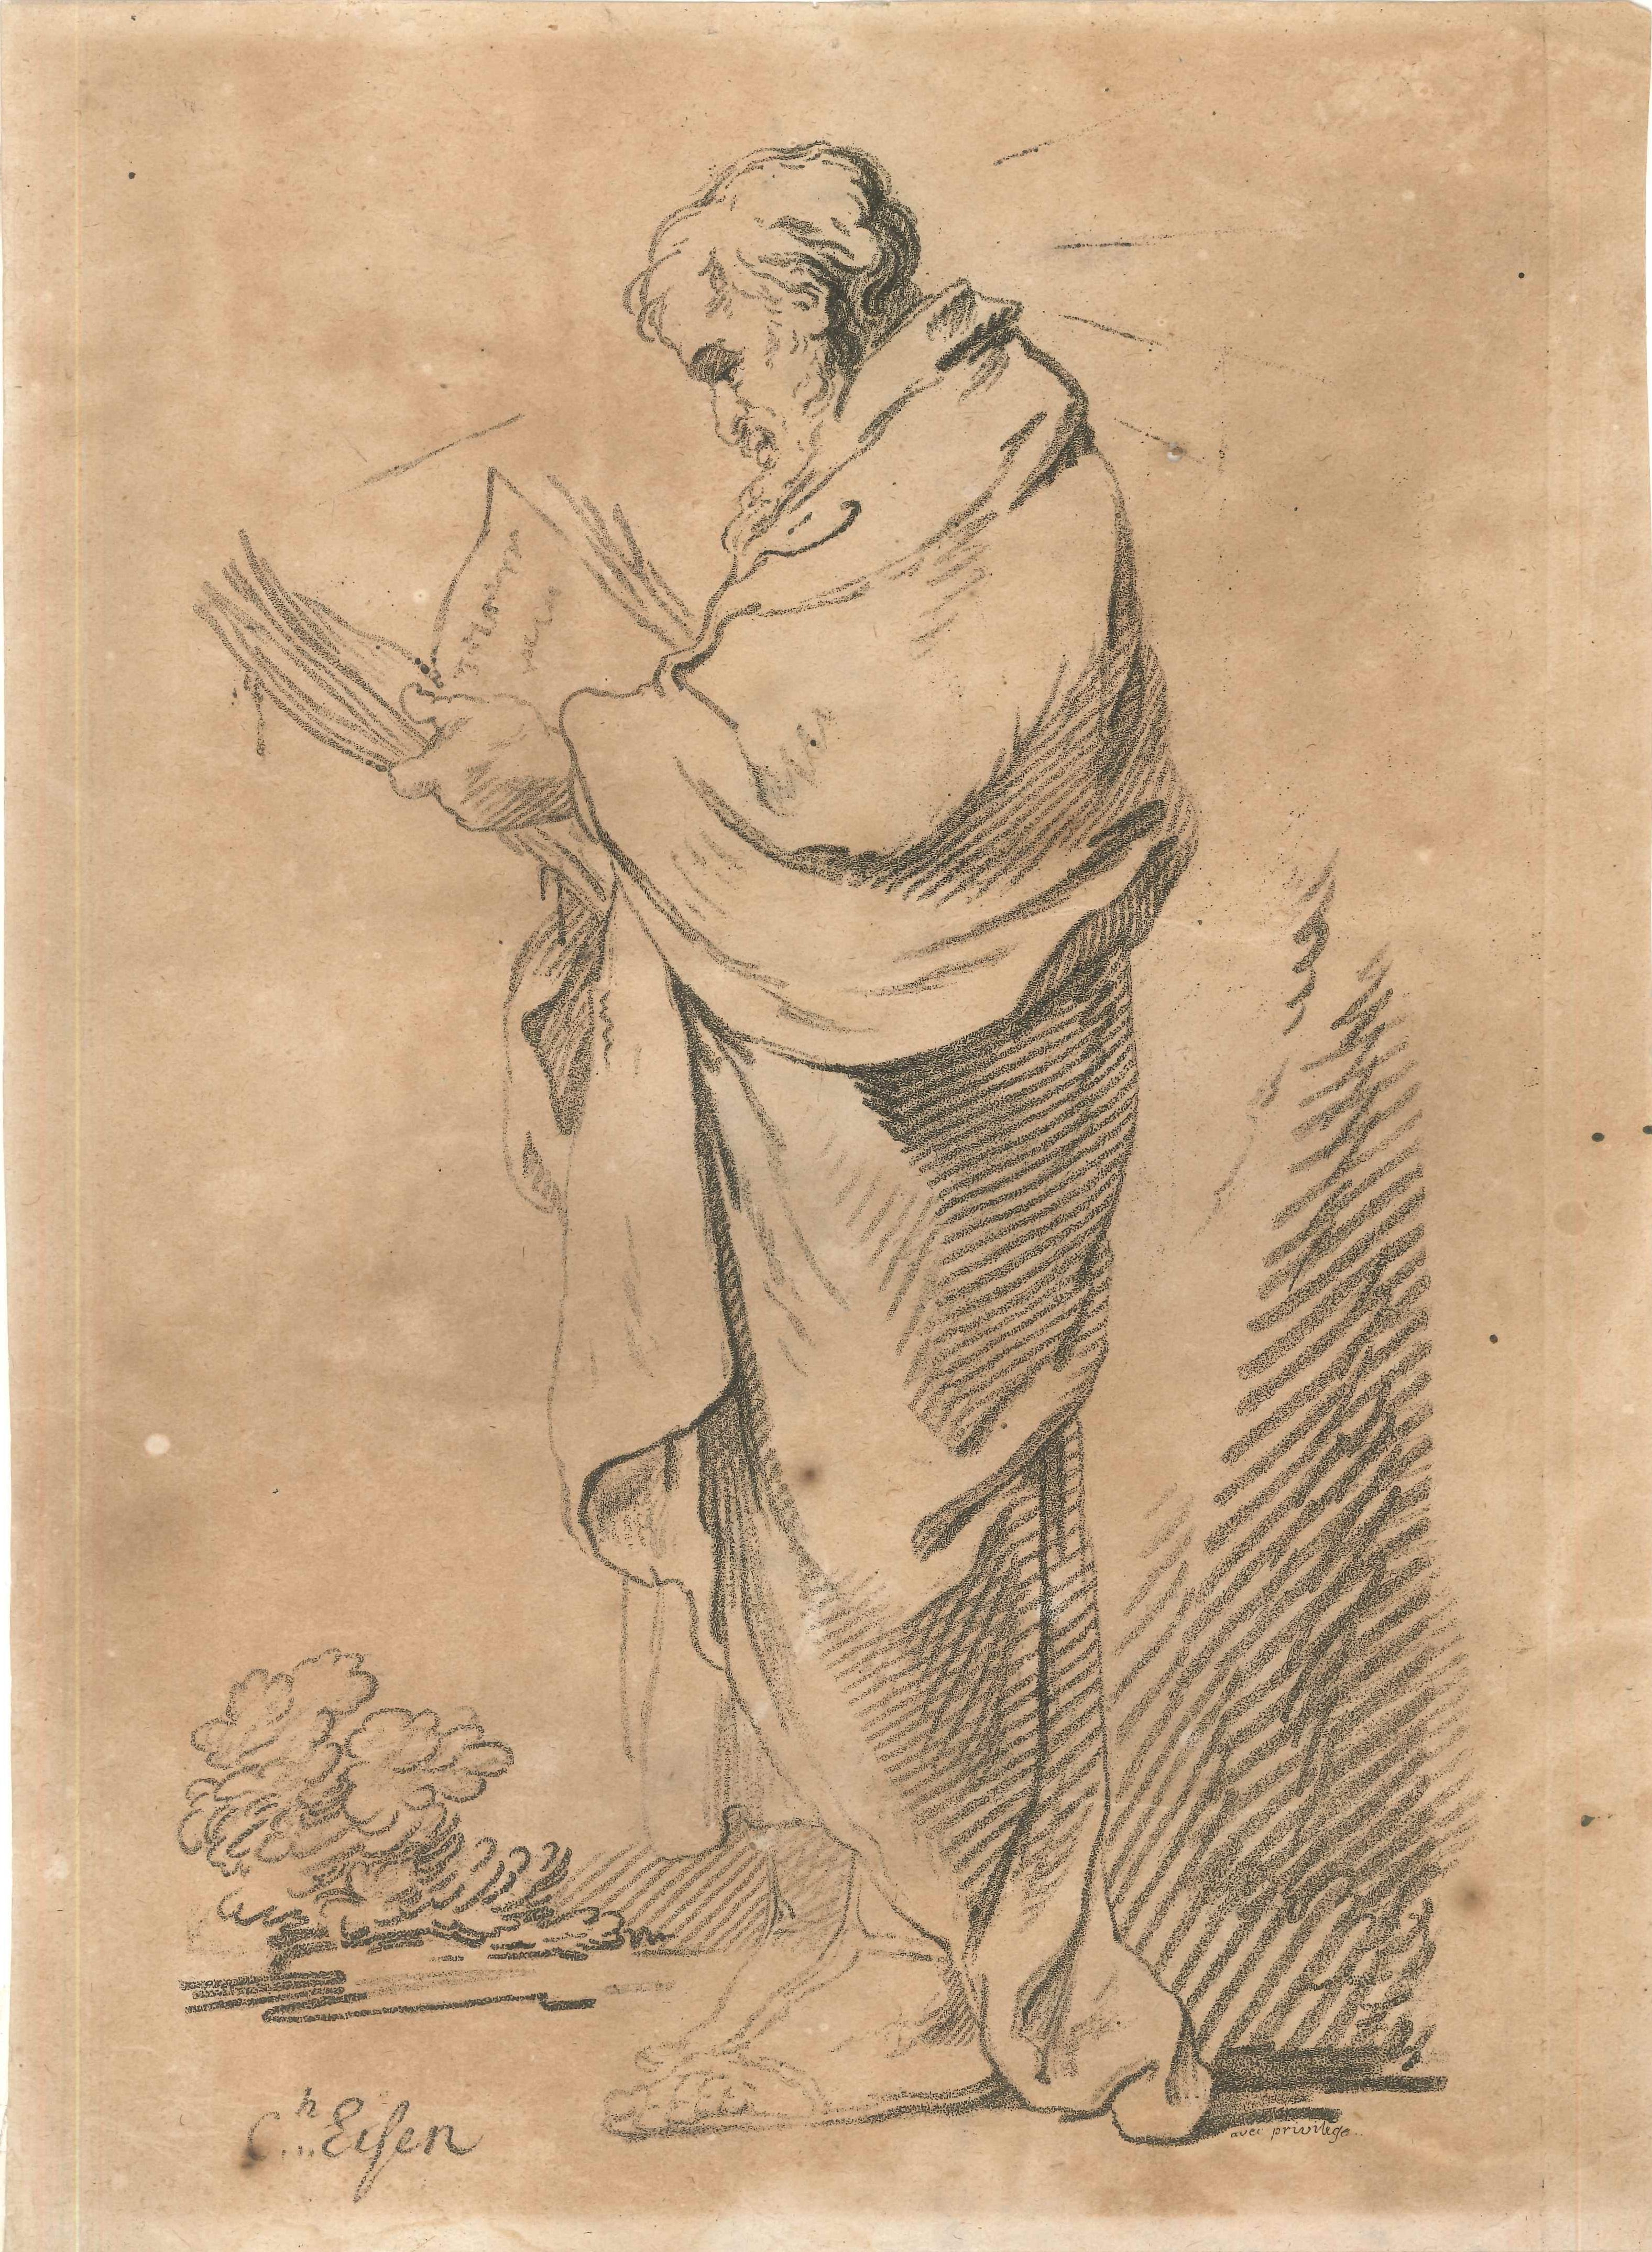 Charles-Dominique-Joseph Eisen Figurative Print - The Patriarch - Original Lithograph on Paper - Late 18th Century